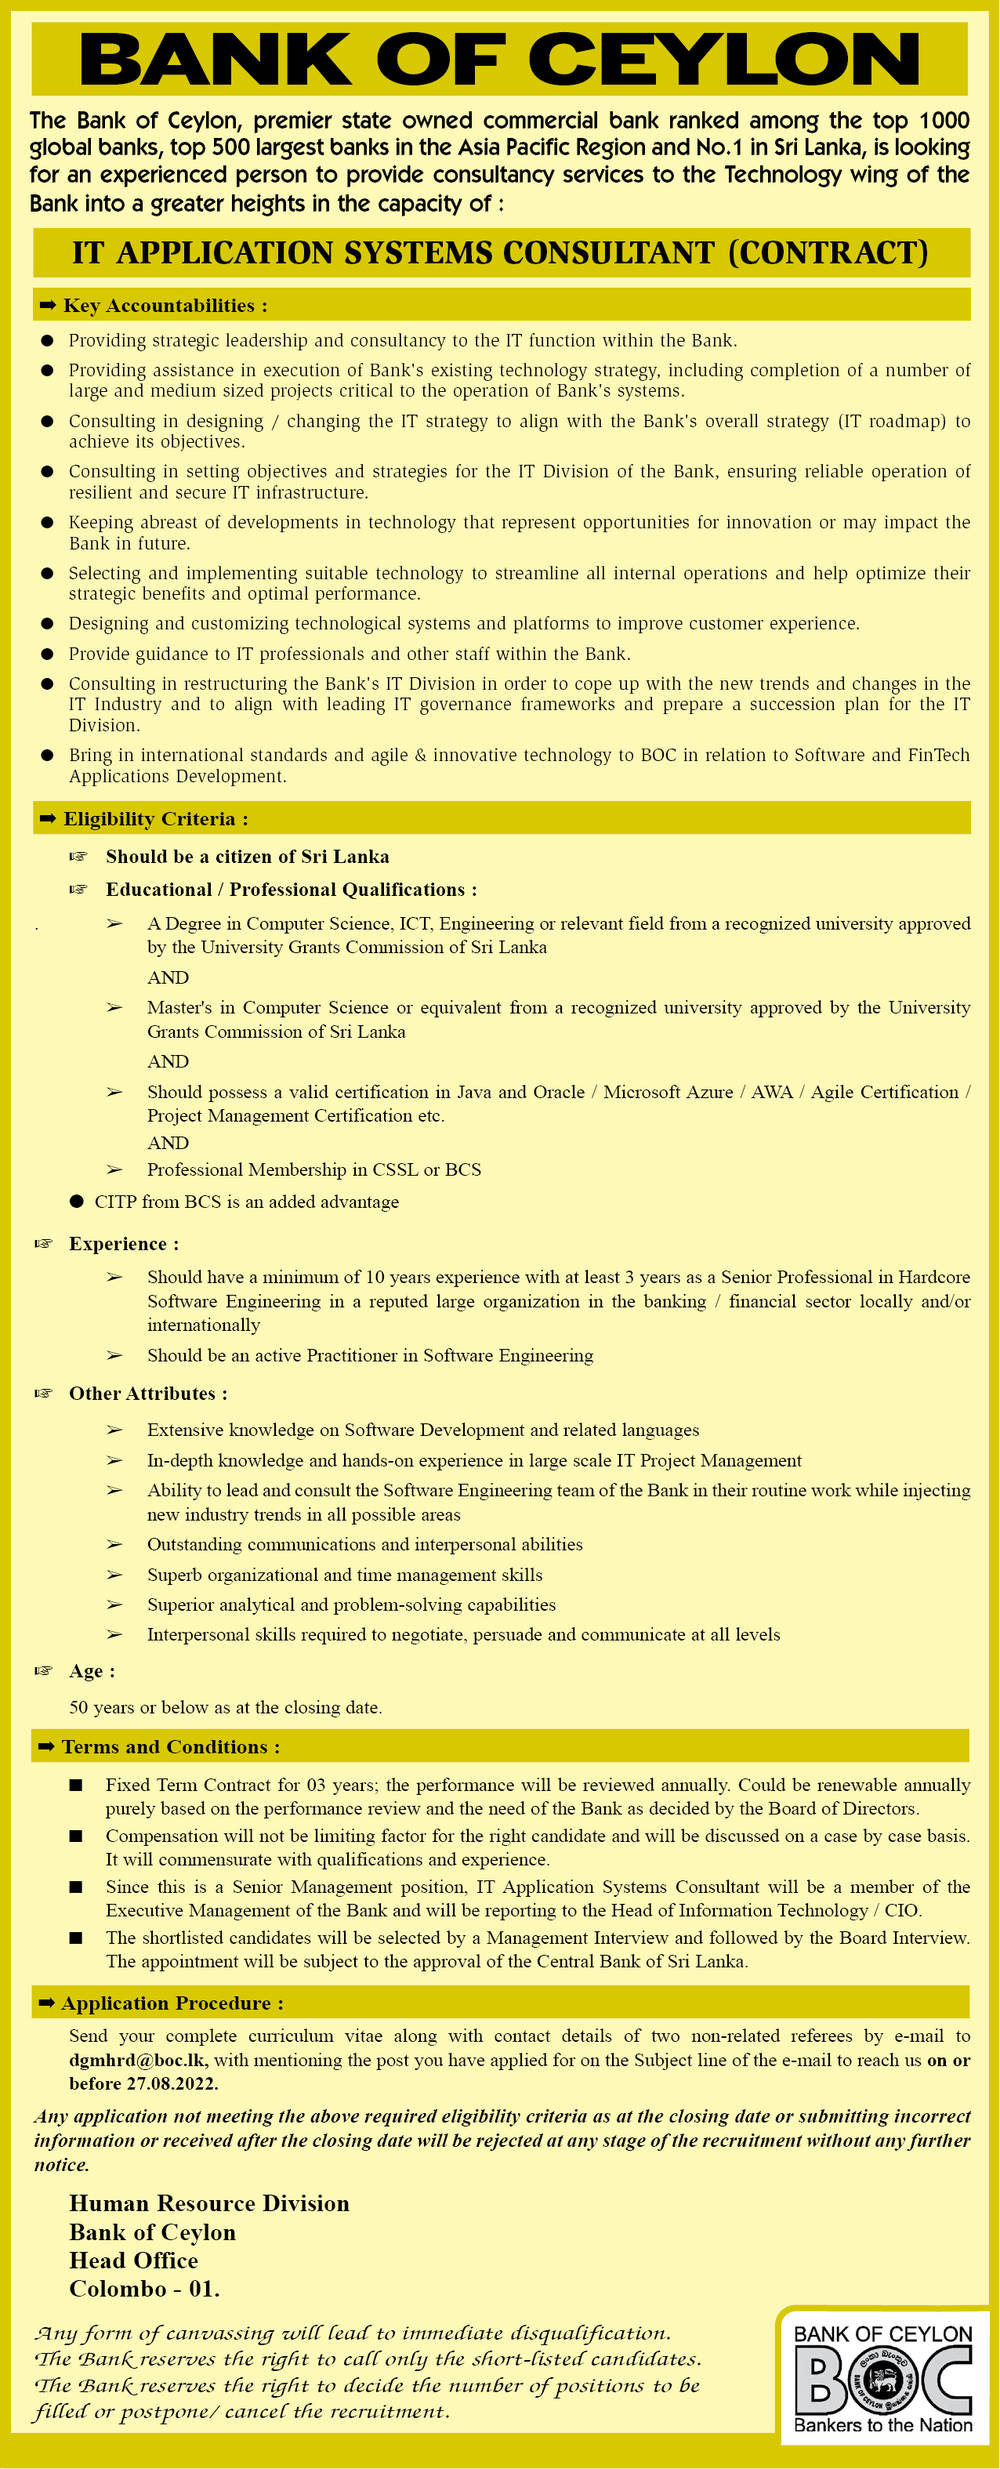 IT Application System Consultant Vacancy in Bank of Ceylon BOC Jobs vacancies